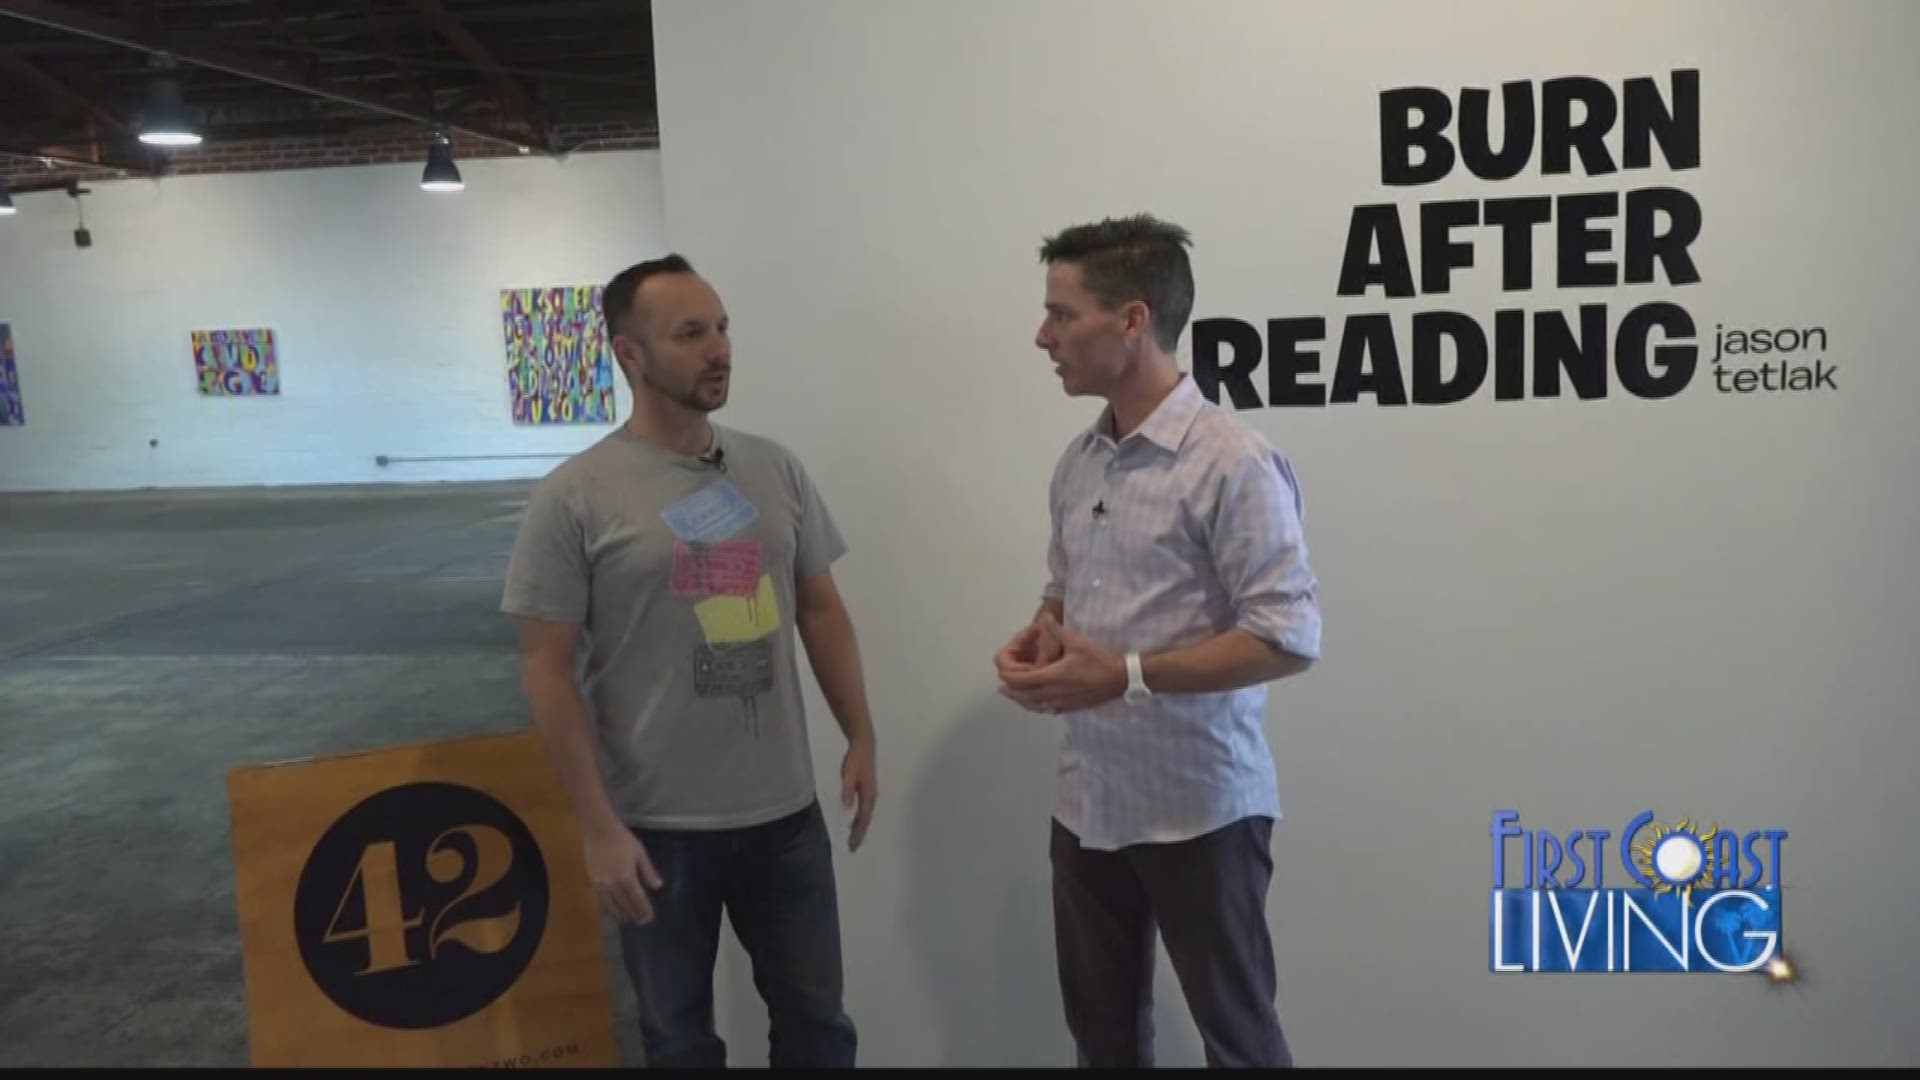 Curtis talks with Jason Tetlak about one Hot art show